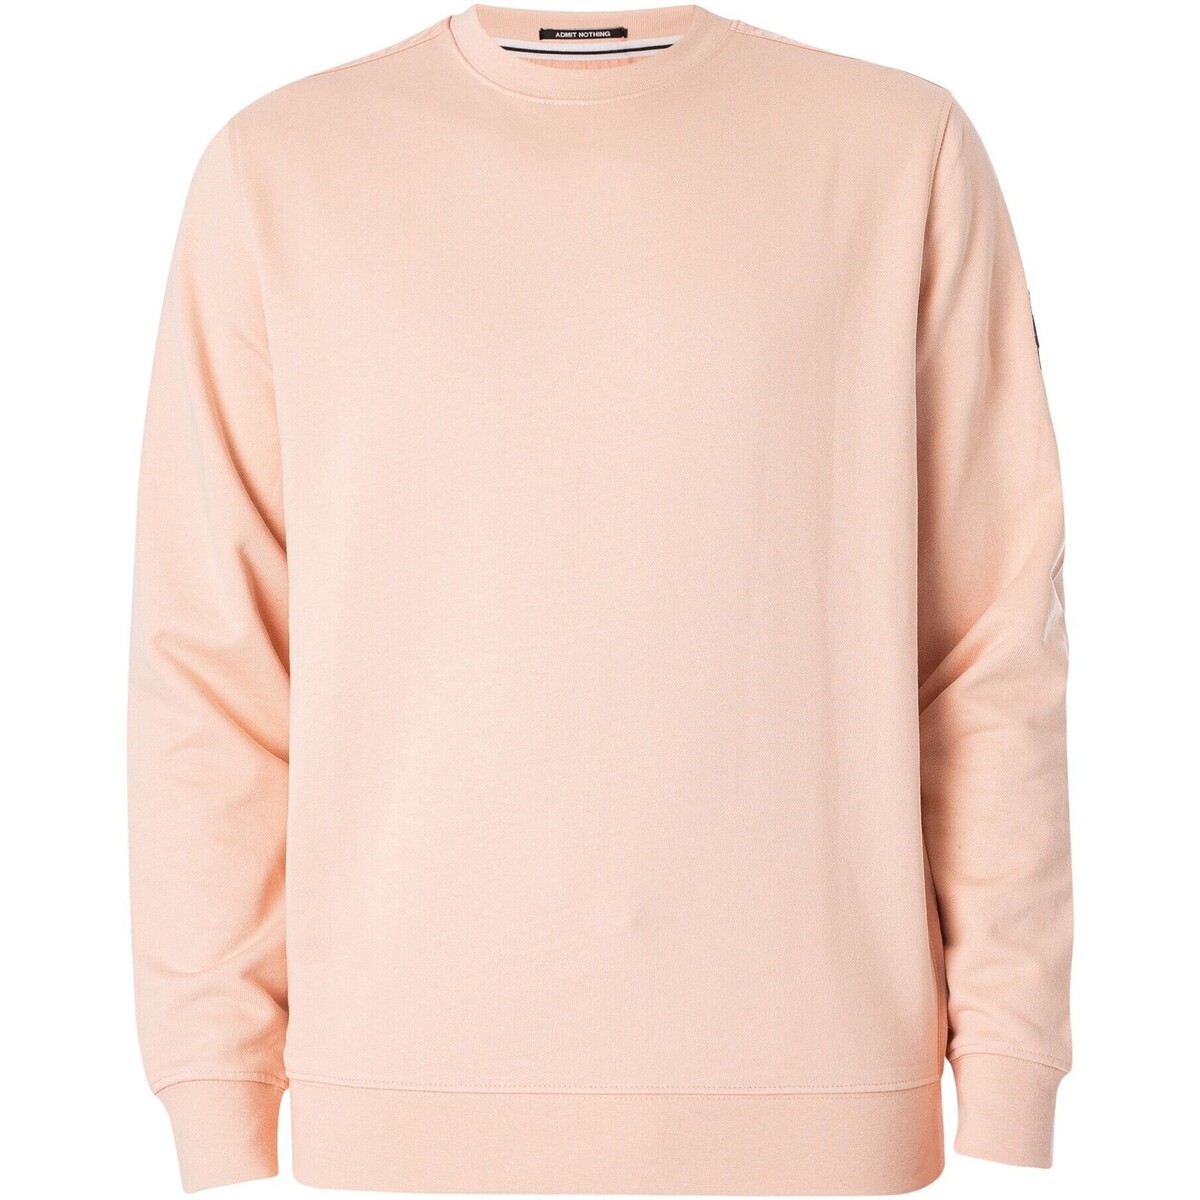 Kleidung Herren Sweatshirts Weekend Offender F-Bombe-Sweatshirt Rosa